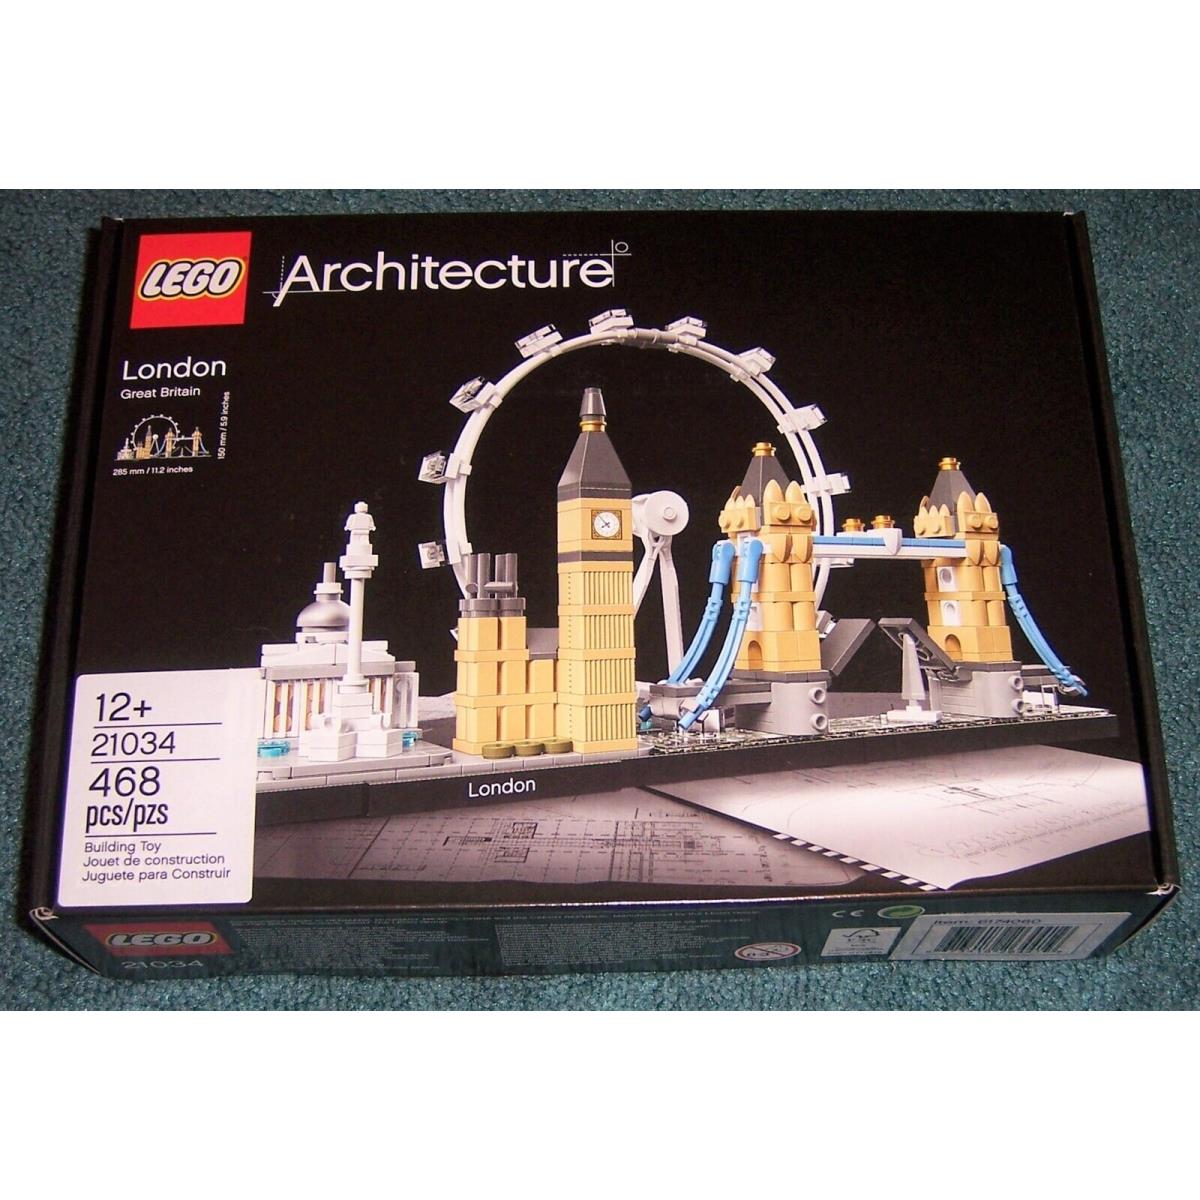 Lego Architecture London 21034 Building Set Great Britain Big Ben Bridge